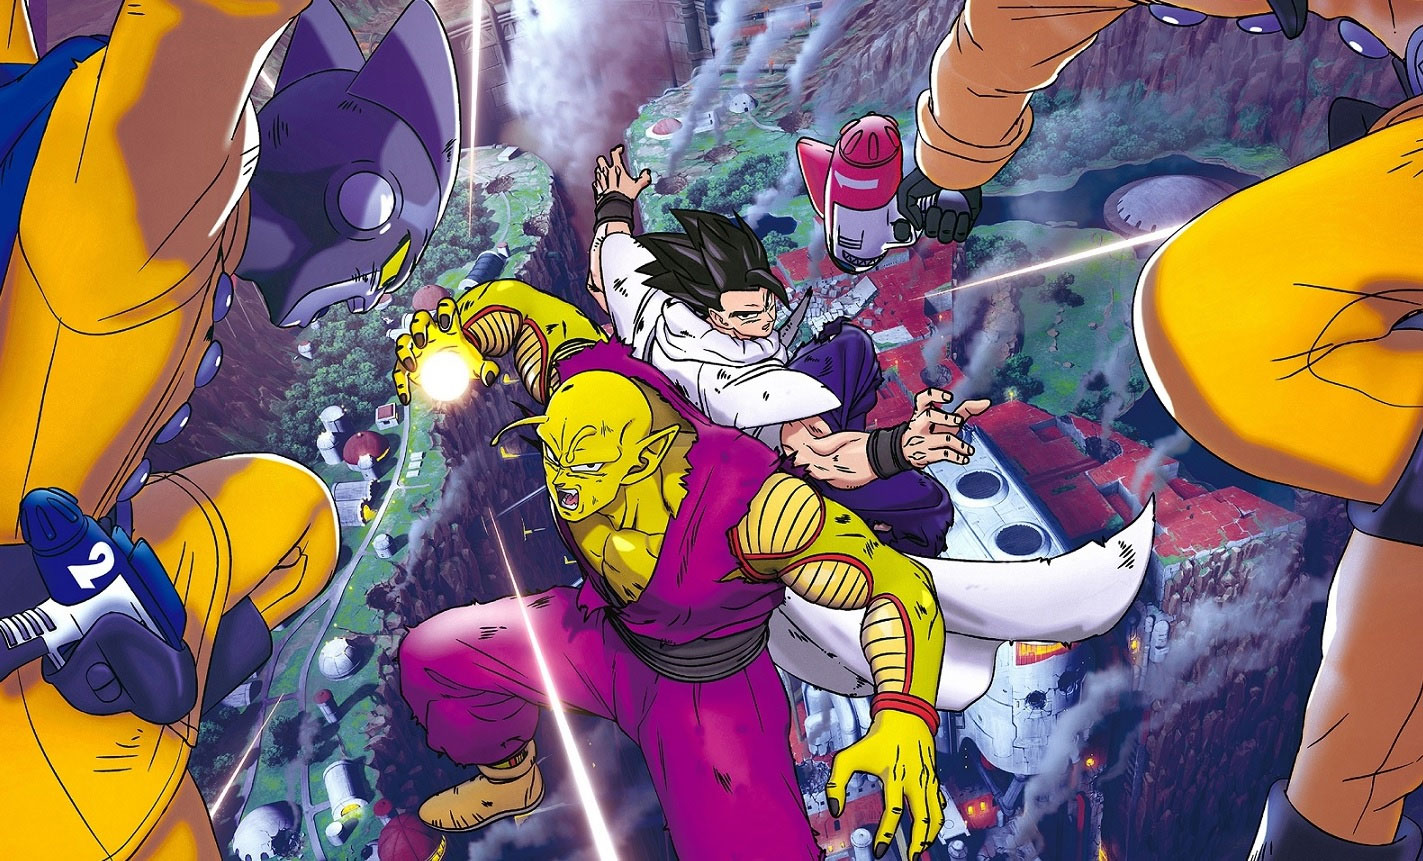 Dragon Ball Super: Super Hero – Artista desenha novos personagens no estilo  clássico - Critical Hits